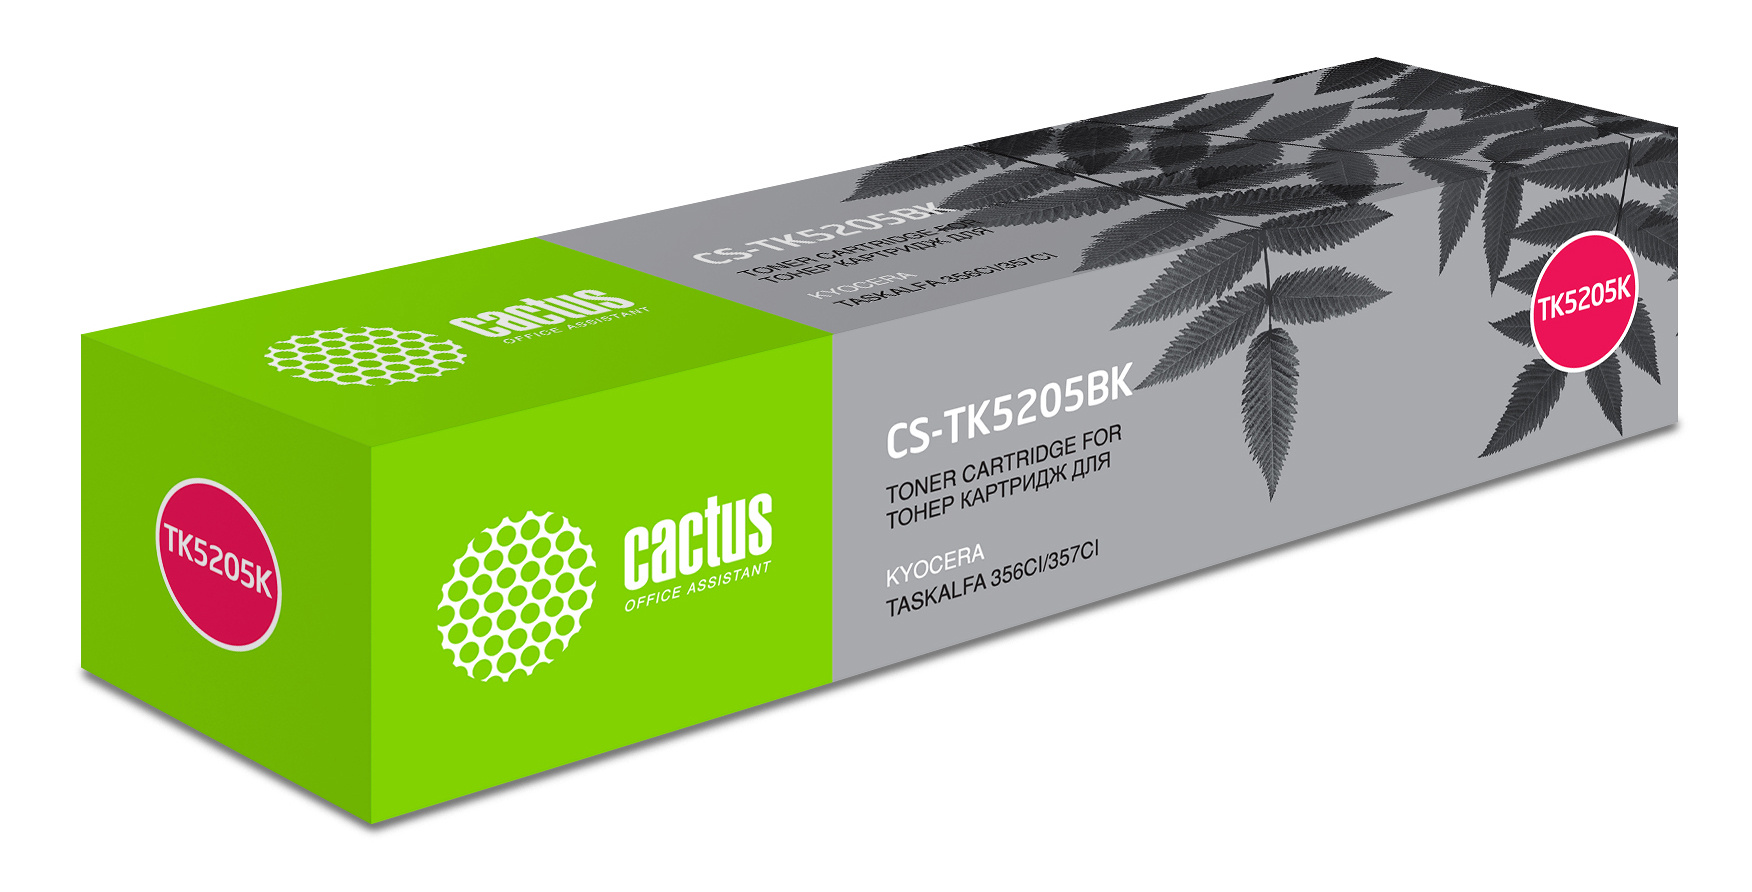   Cactus CS-TK5205BK  (18000.)  Kyocera Ecosys 356ci